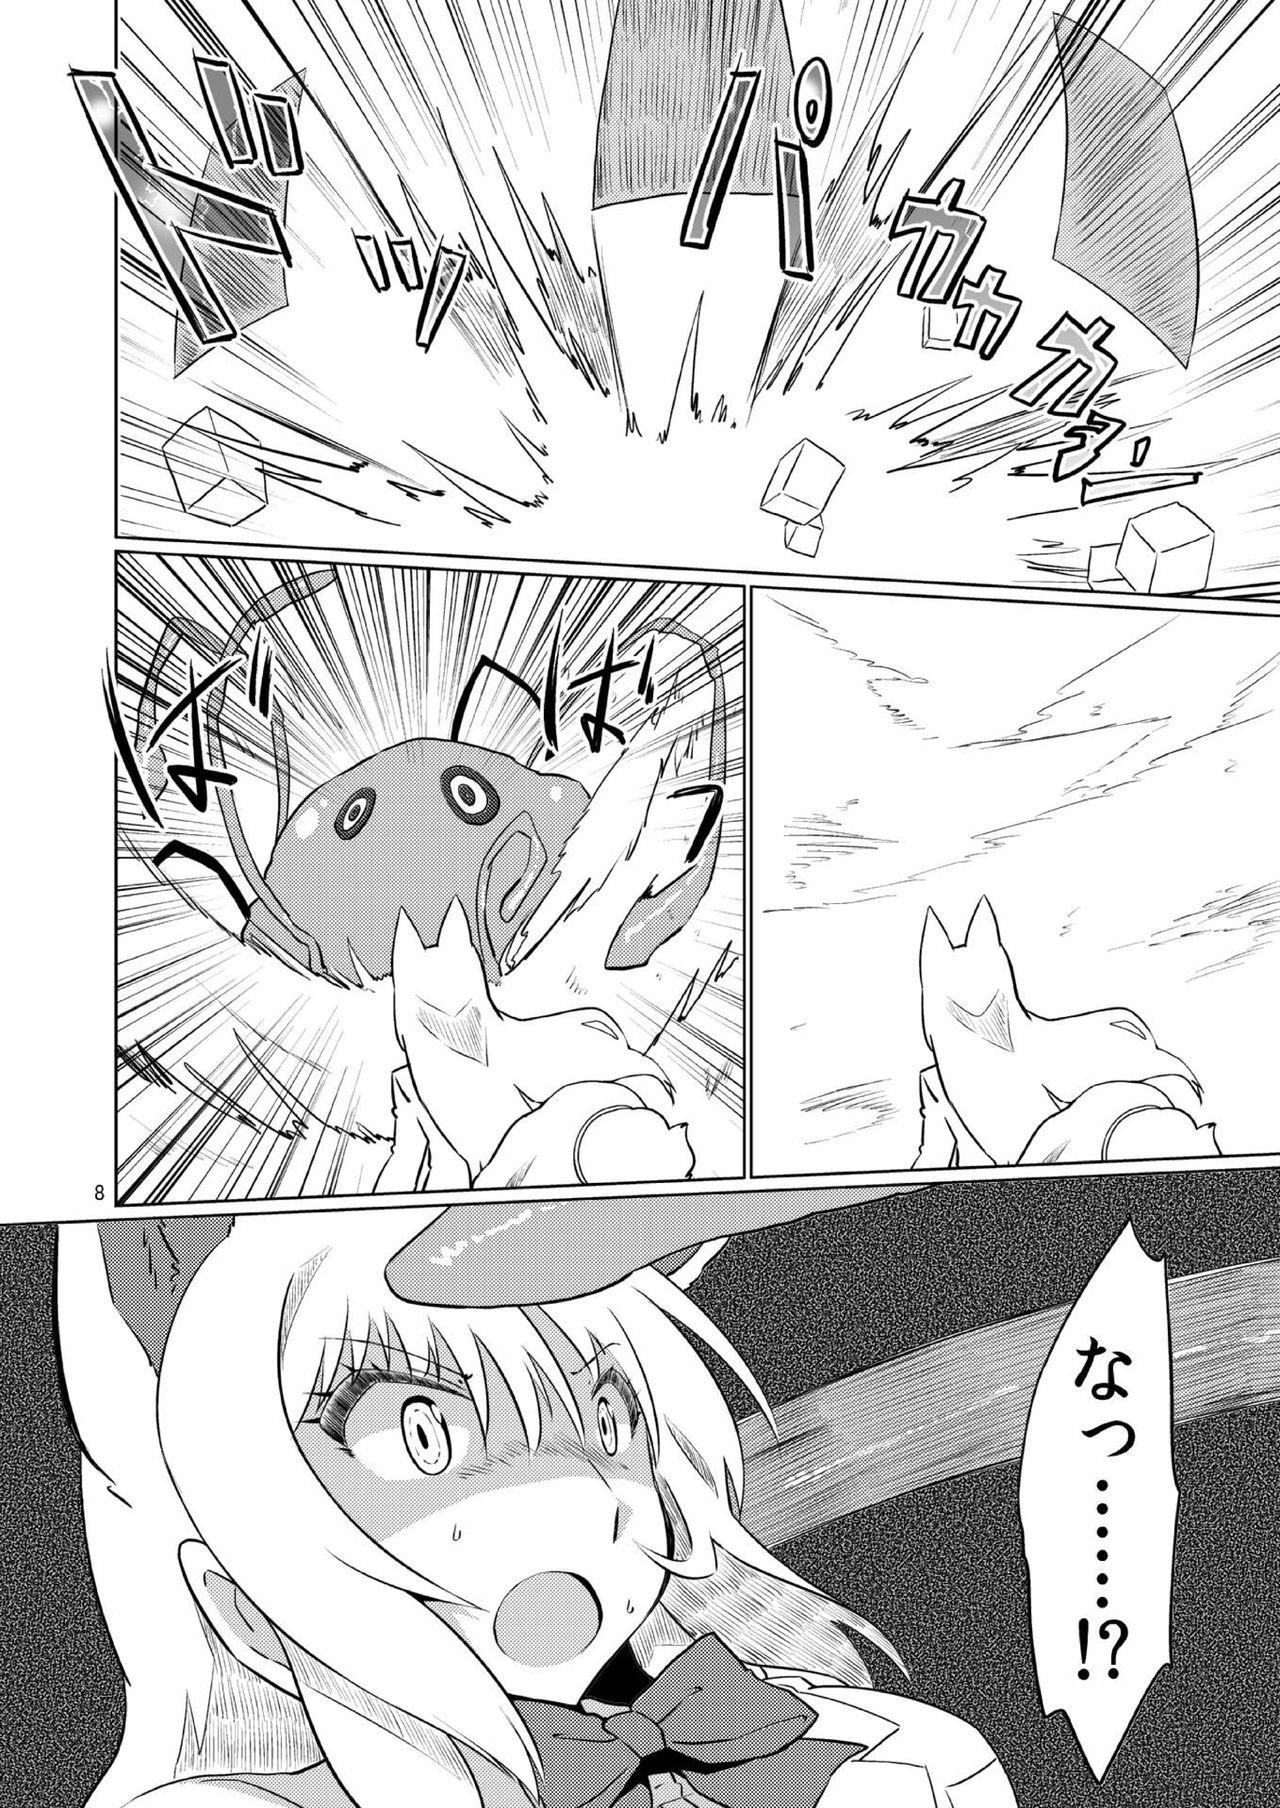 Cream Oinarisama vs Shokushu - Kemono friends Style - Page 8